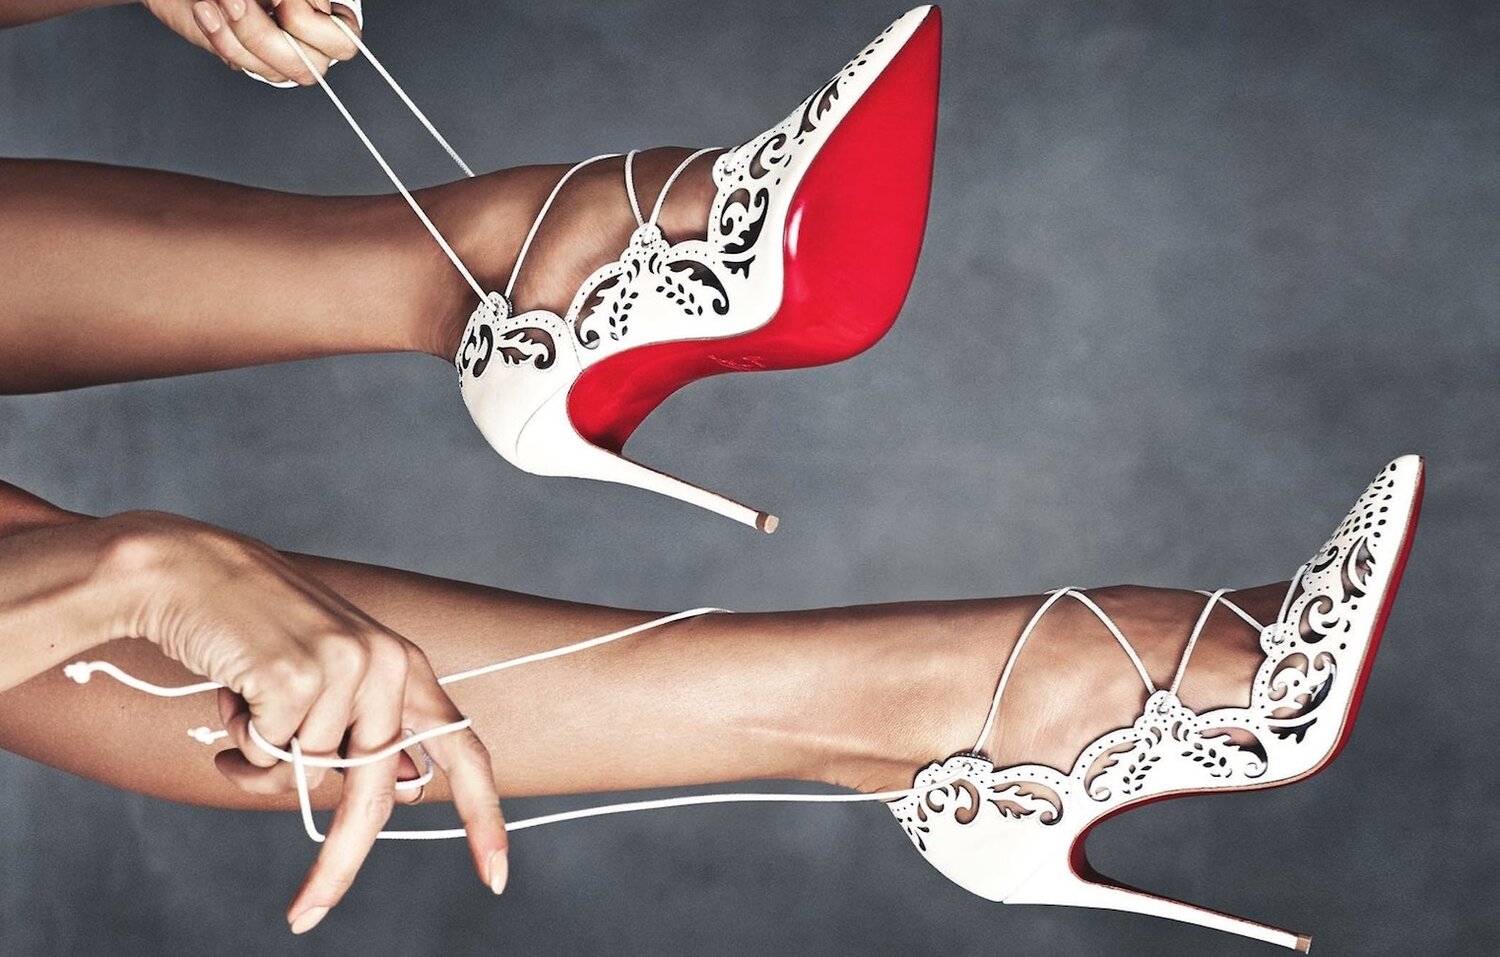 designer heels red bottom